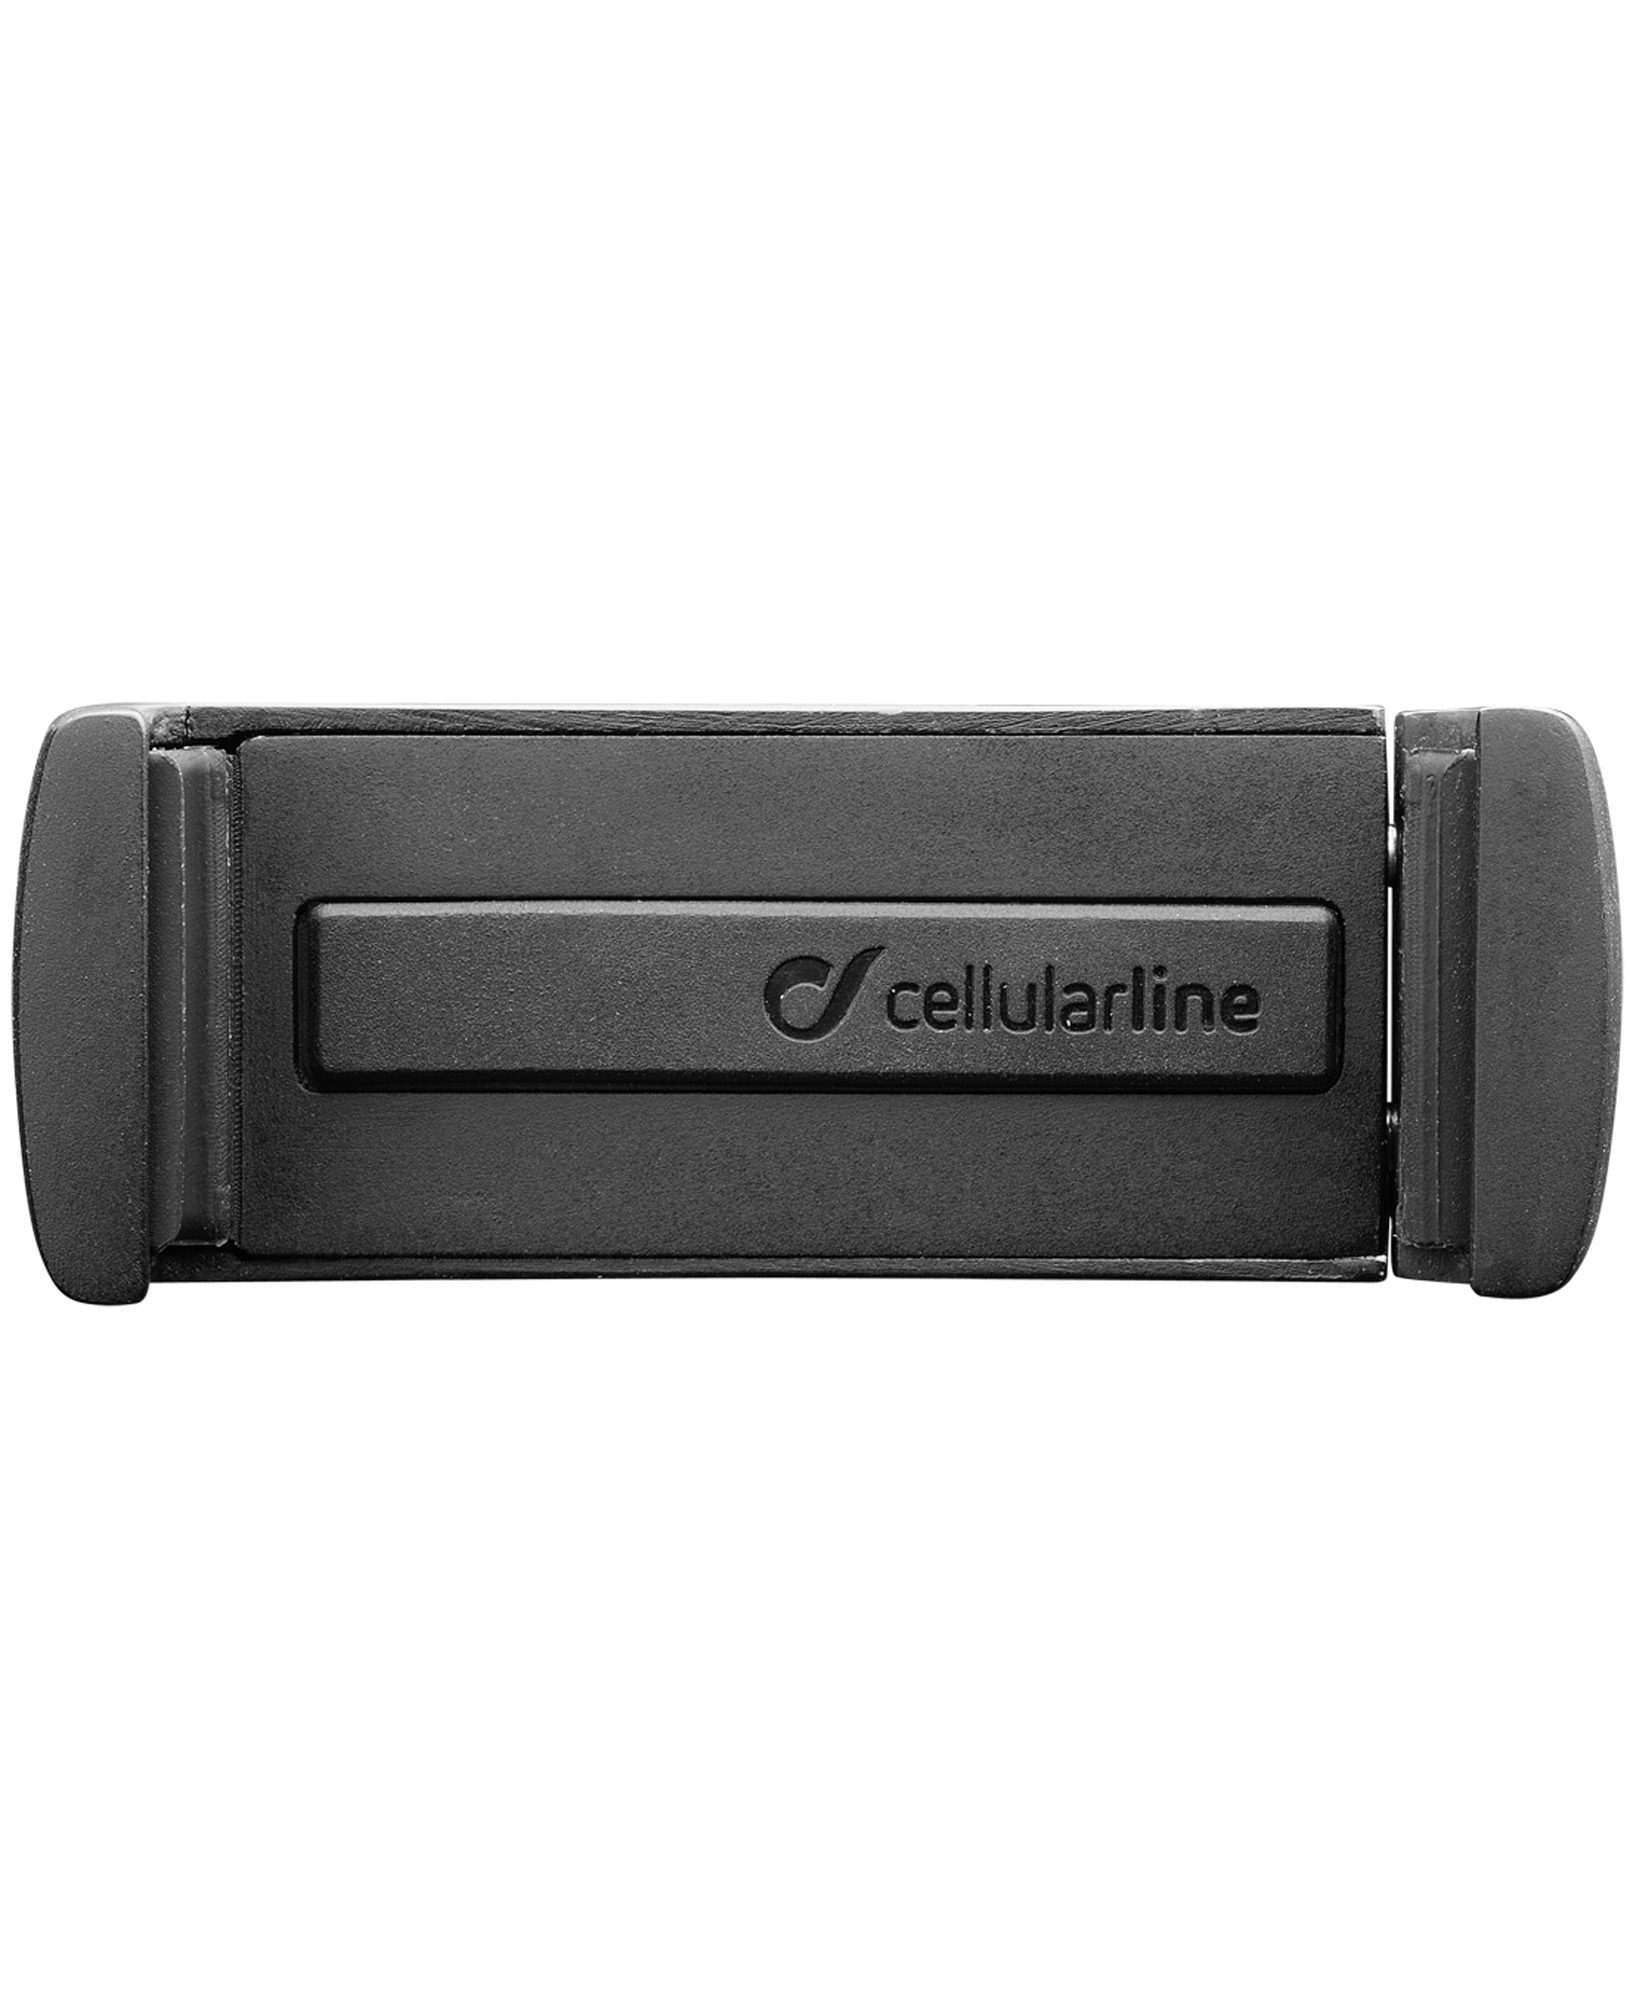 Cellularline Handy drive